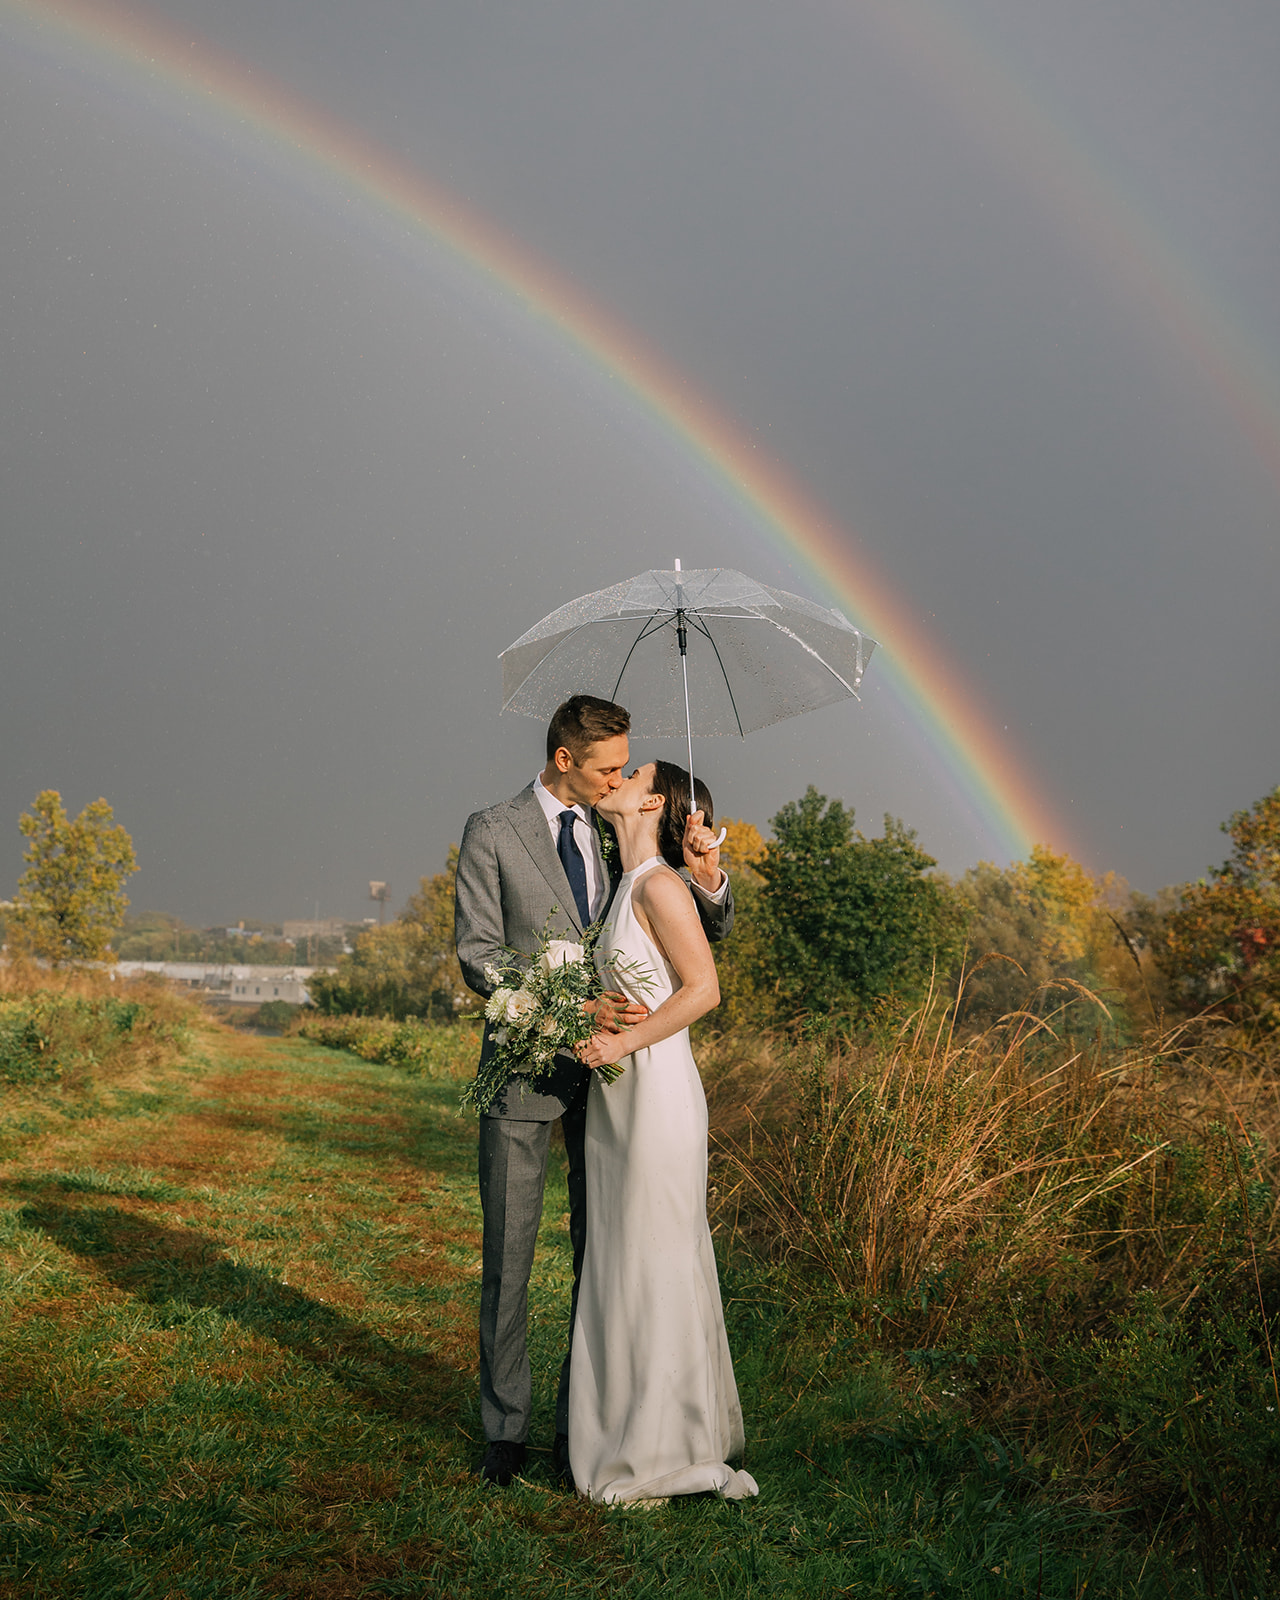 Bride and Groom kiss in rain under a rainbow